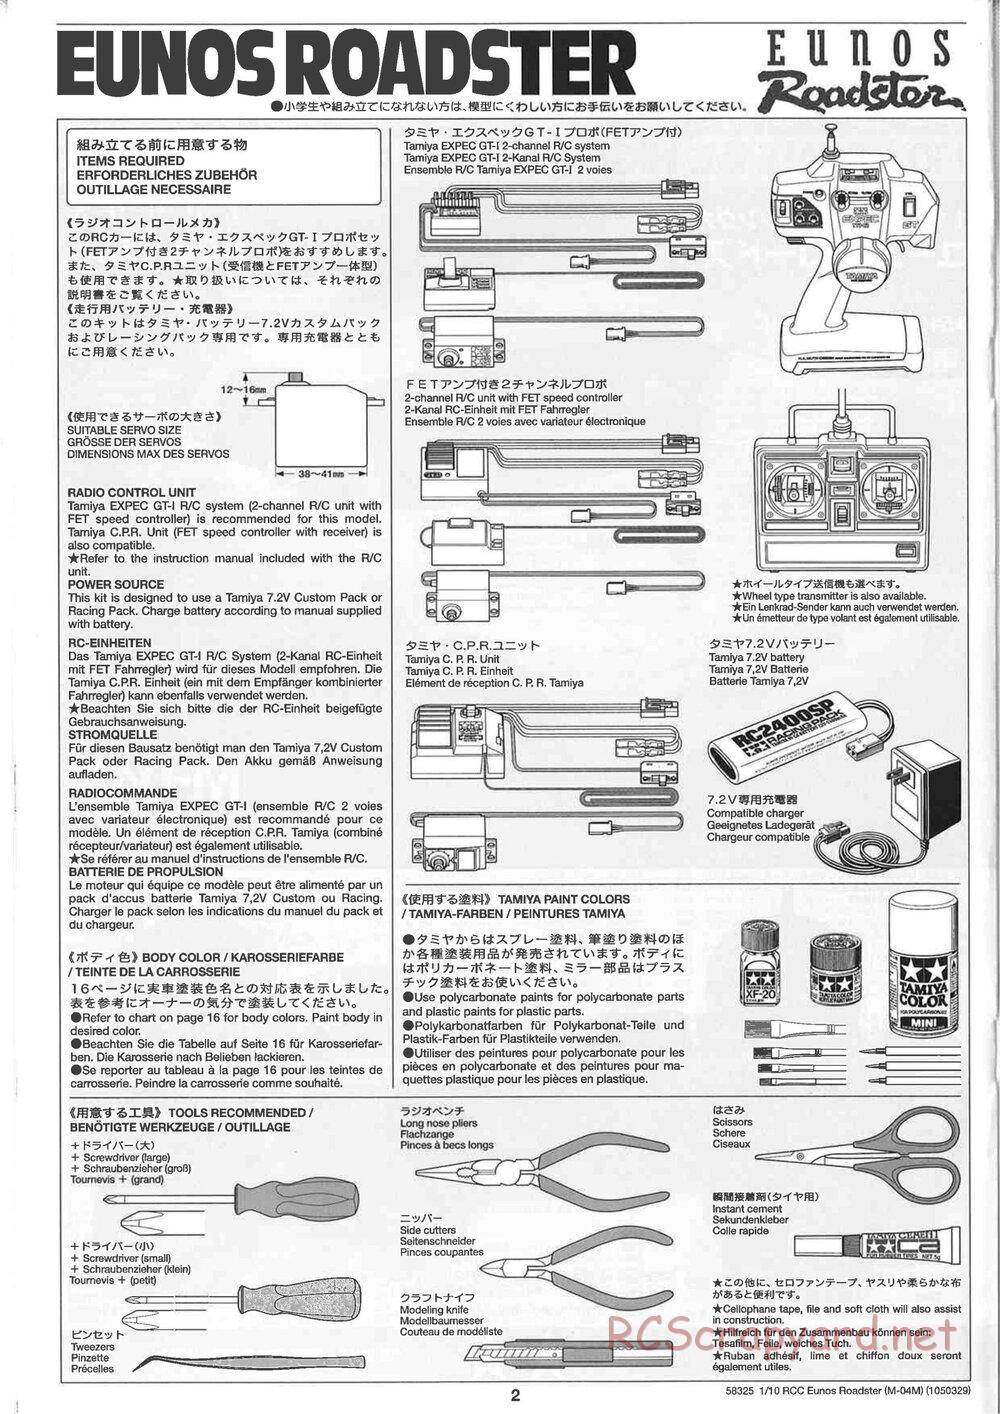 Tamiya - Eunos Roadster - M04M Chassis - Manual - Page 2